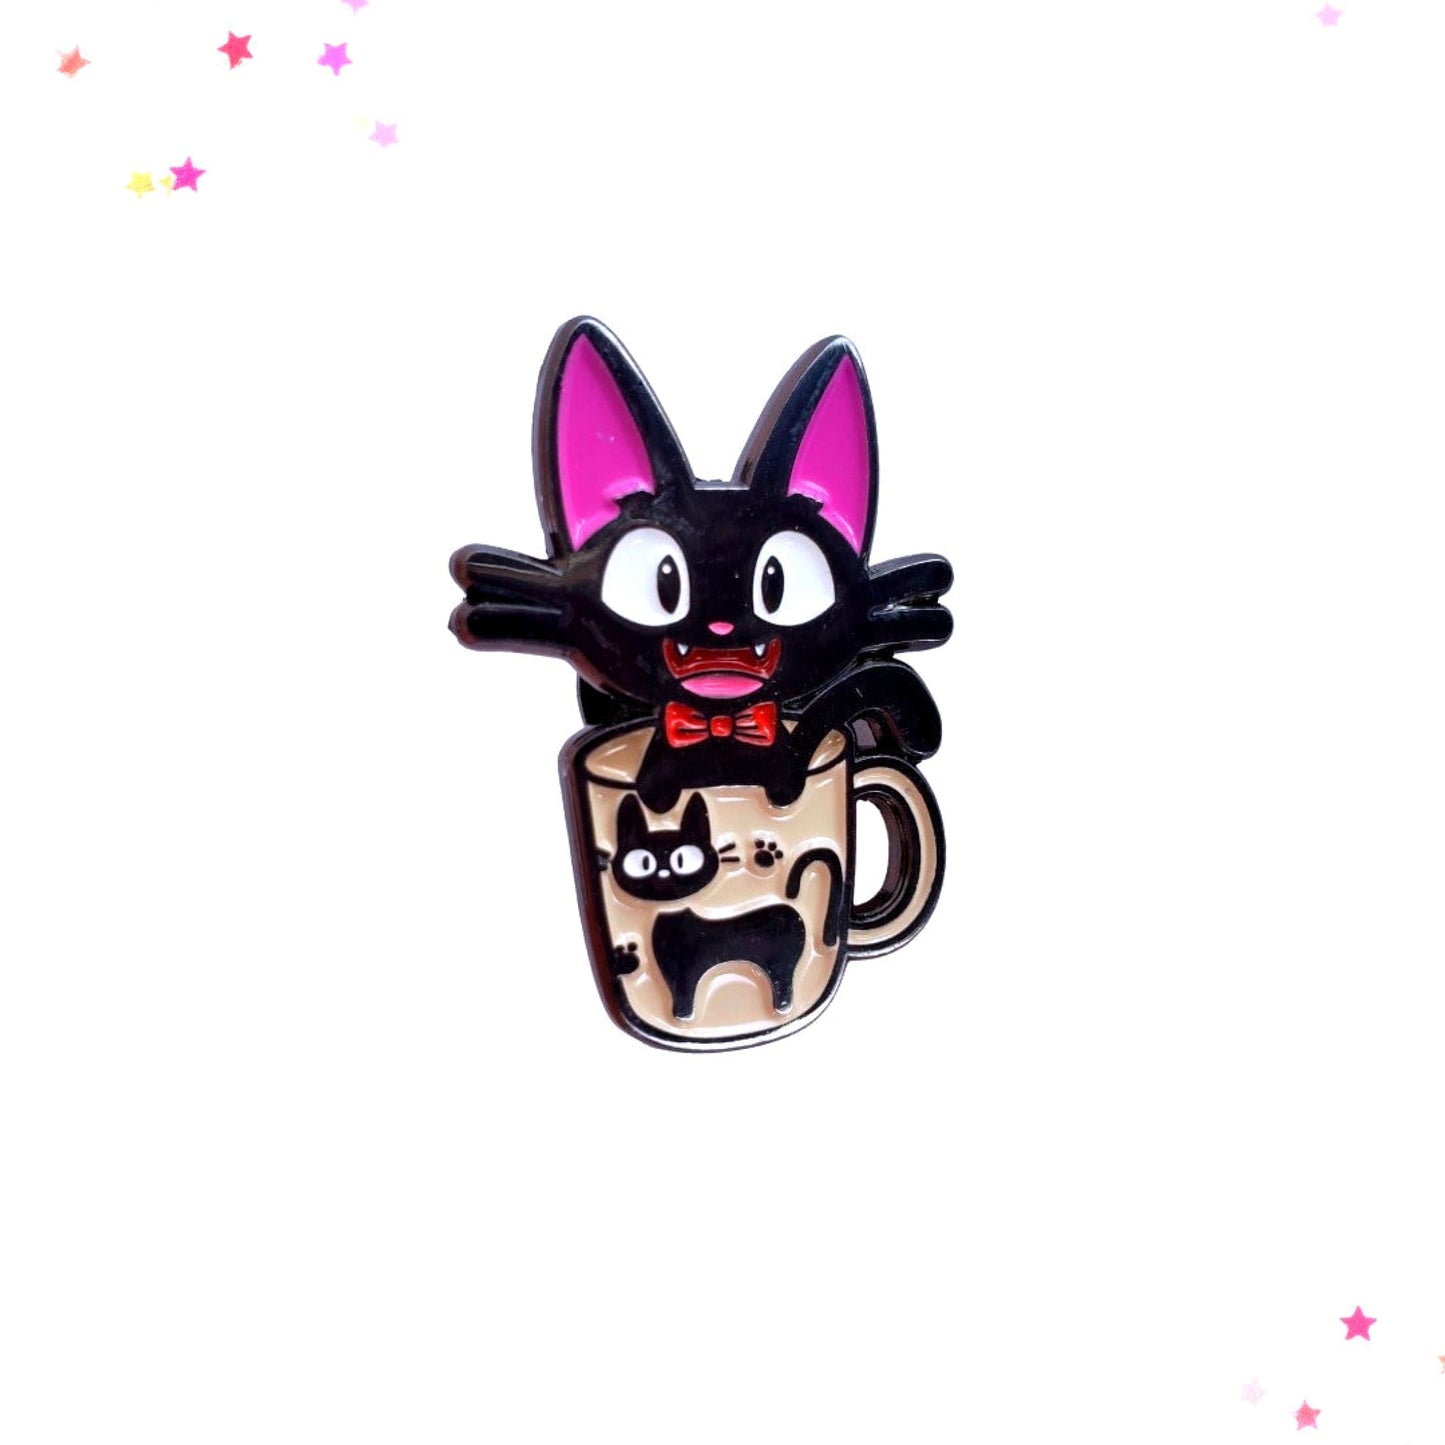 Kiki's Delivery Service Jiji Mug Enamel Pin from Confetti Kitty, Only 7.99